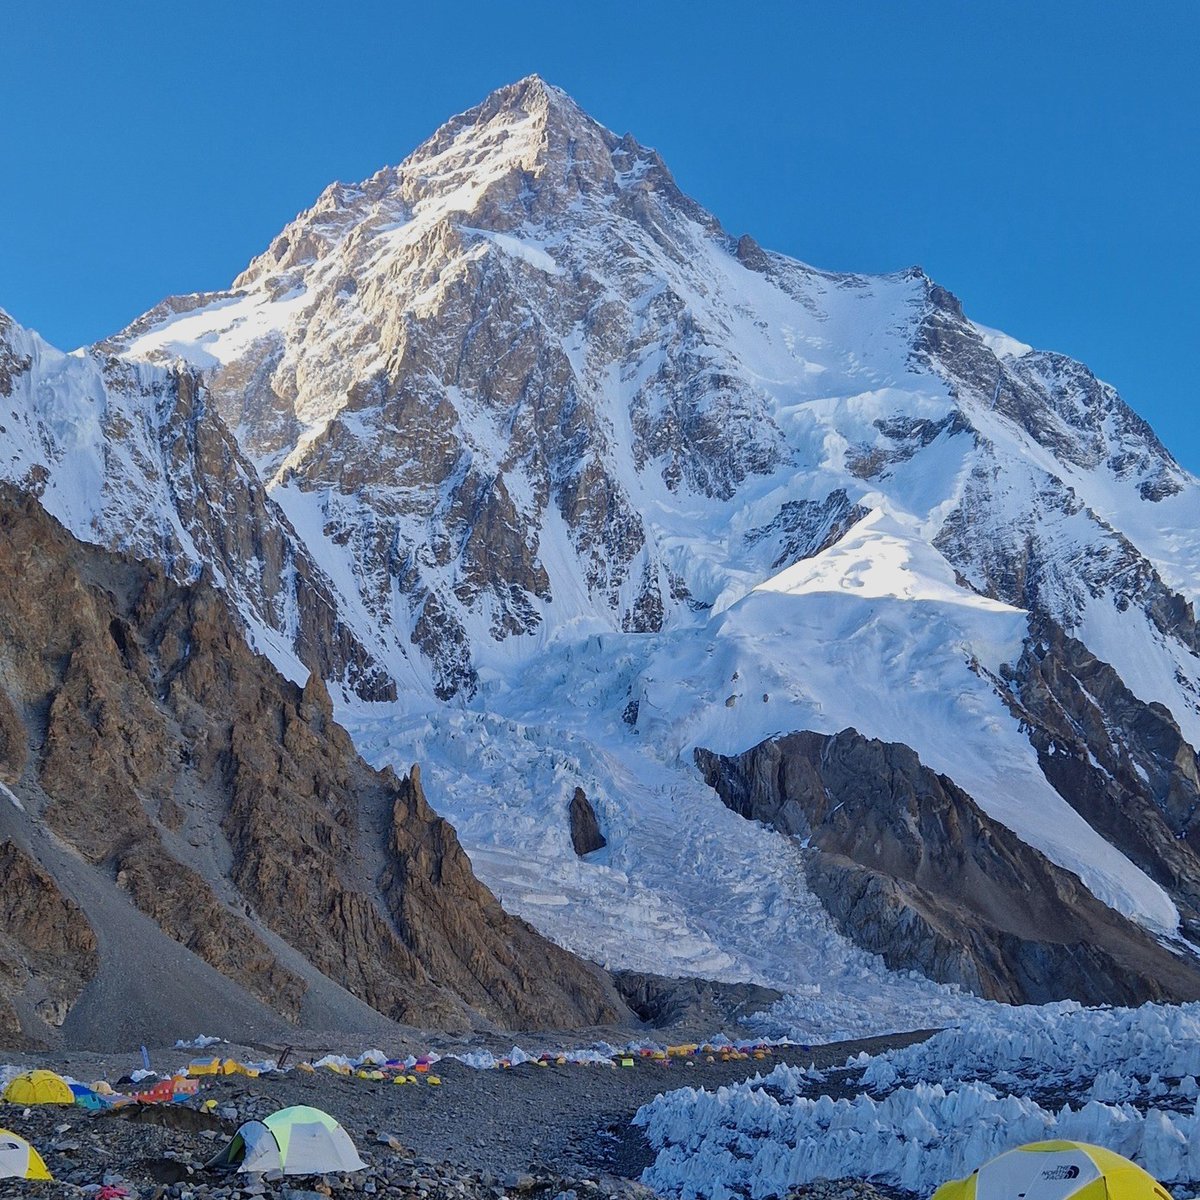 K2 and Godwin Austen glacier